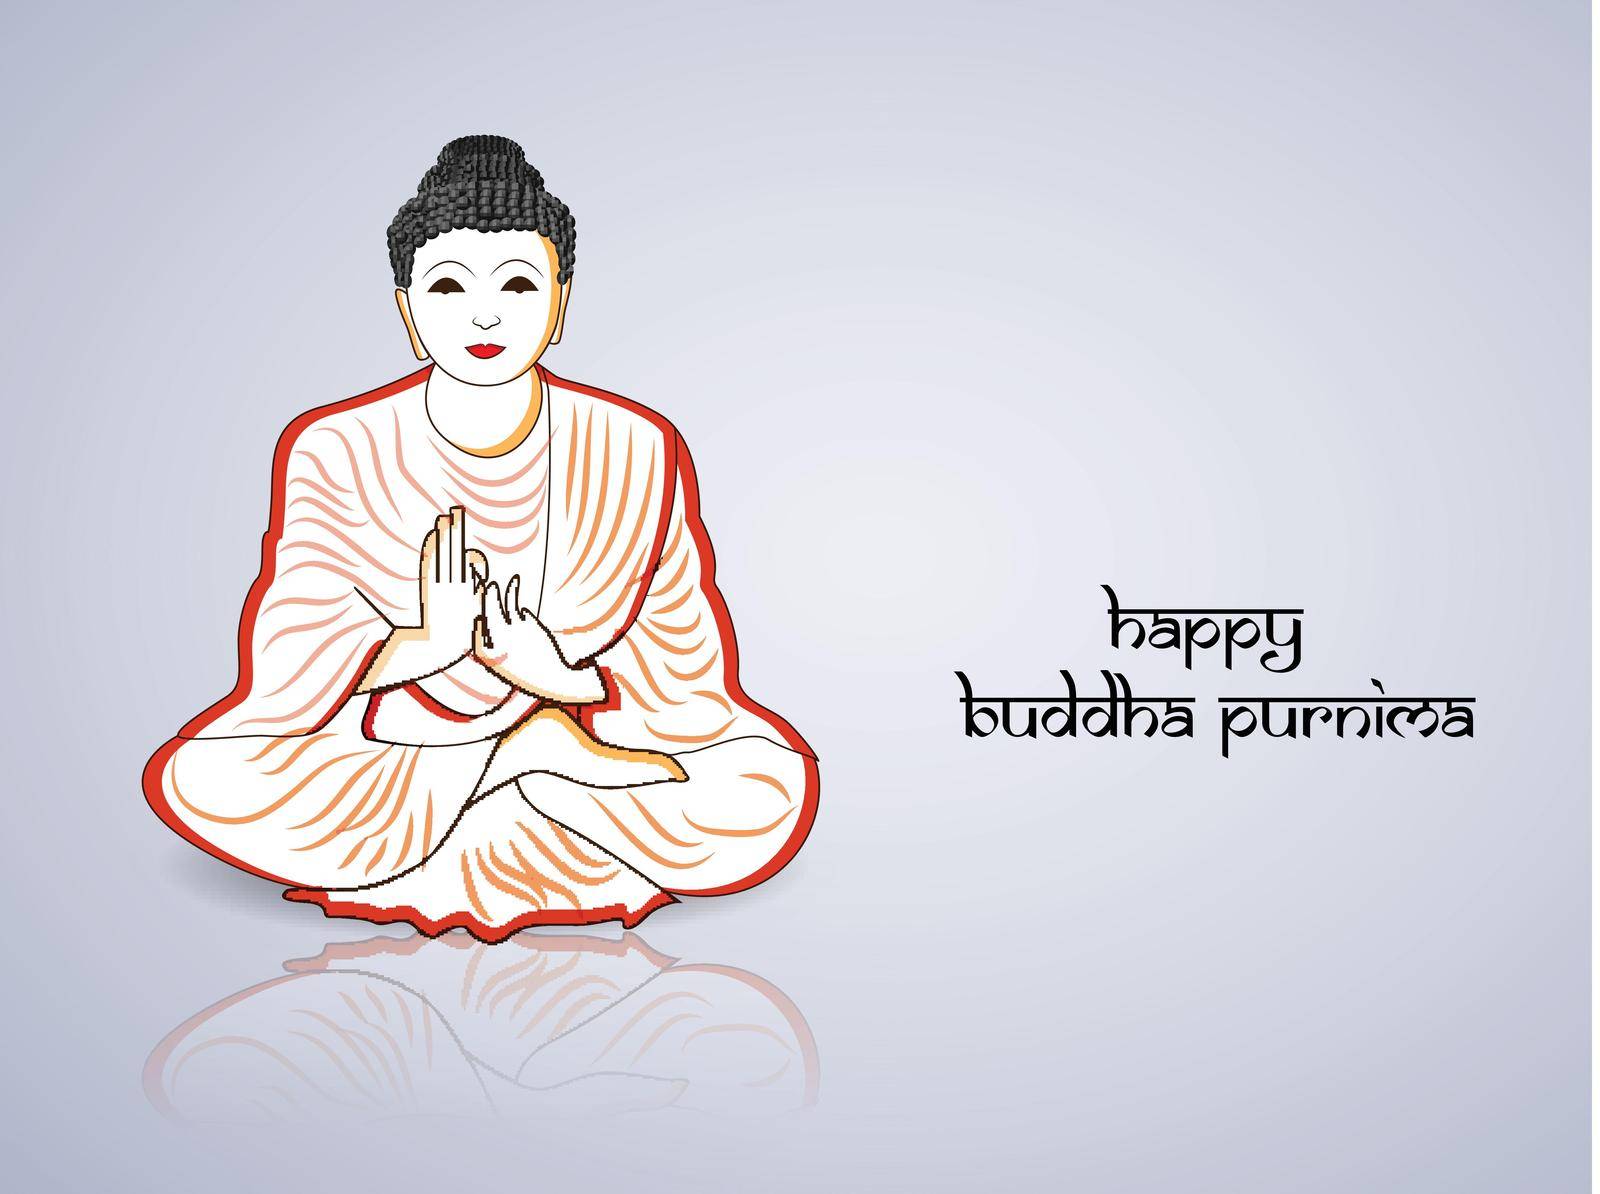 Buddhist festival Buddha Purnima background by vectorworld